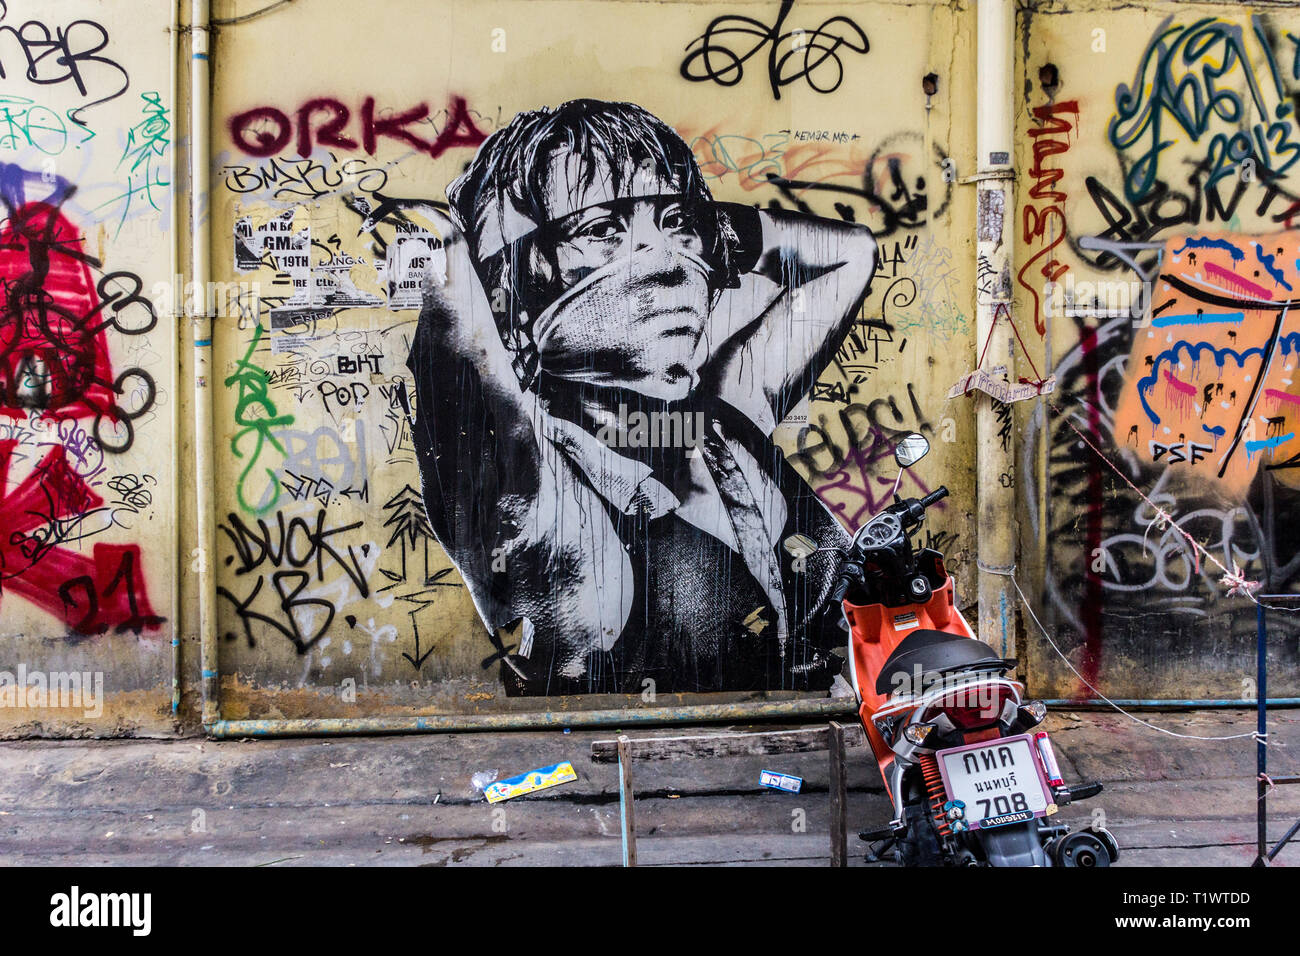 Visage fille mur de graffiti, Khao San Road, Bangkok, Thaïlande Banque D'Images